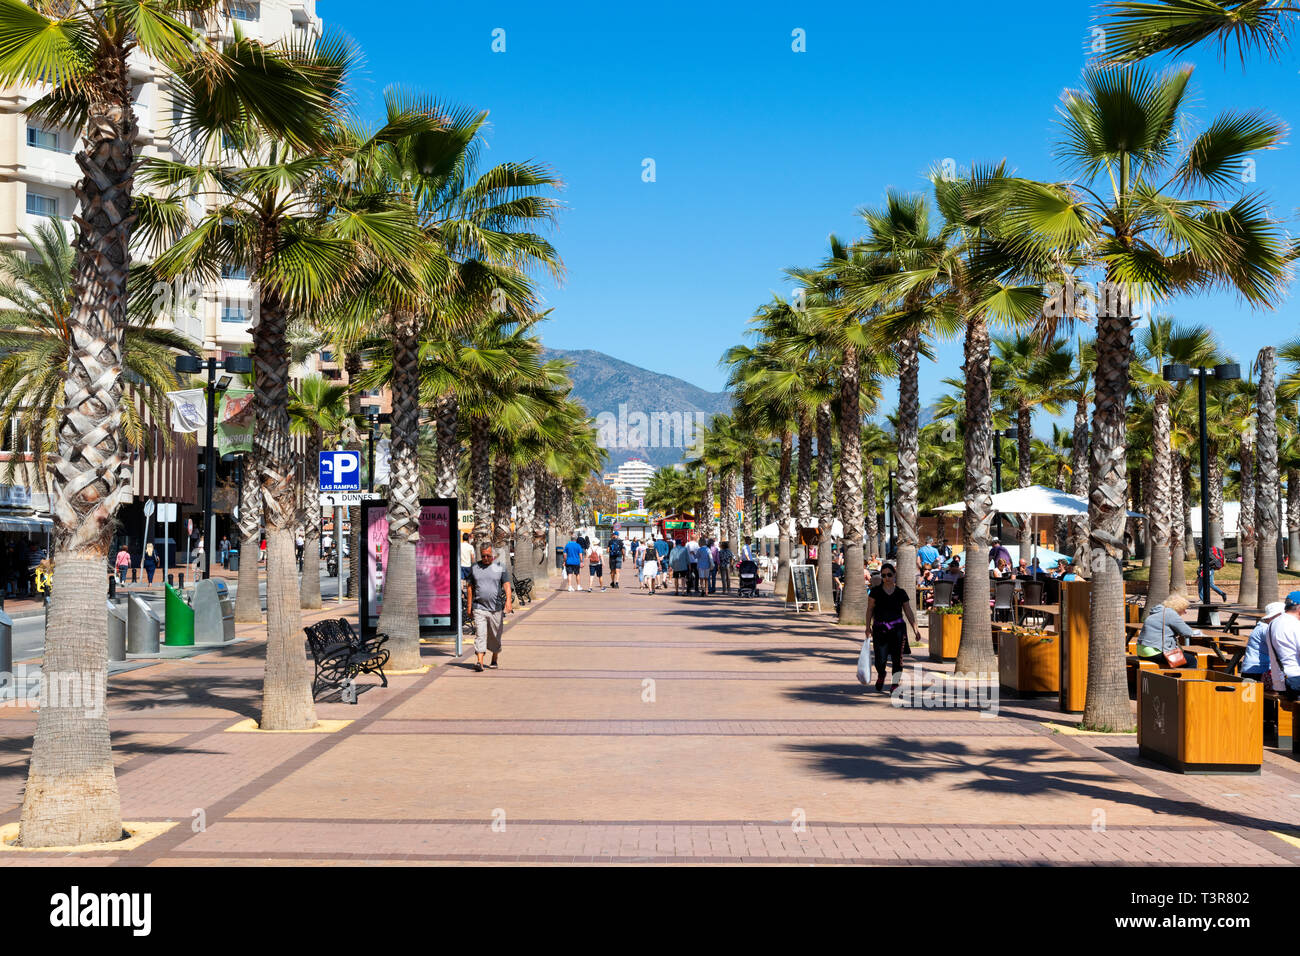 The Promenade at Fuengirola, Malaga, Spain Stock Photo - Alamy